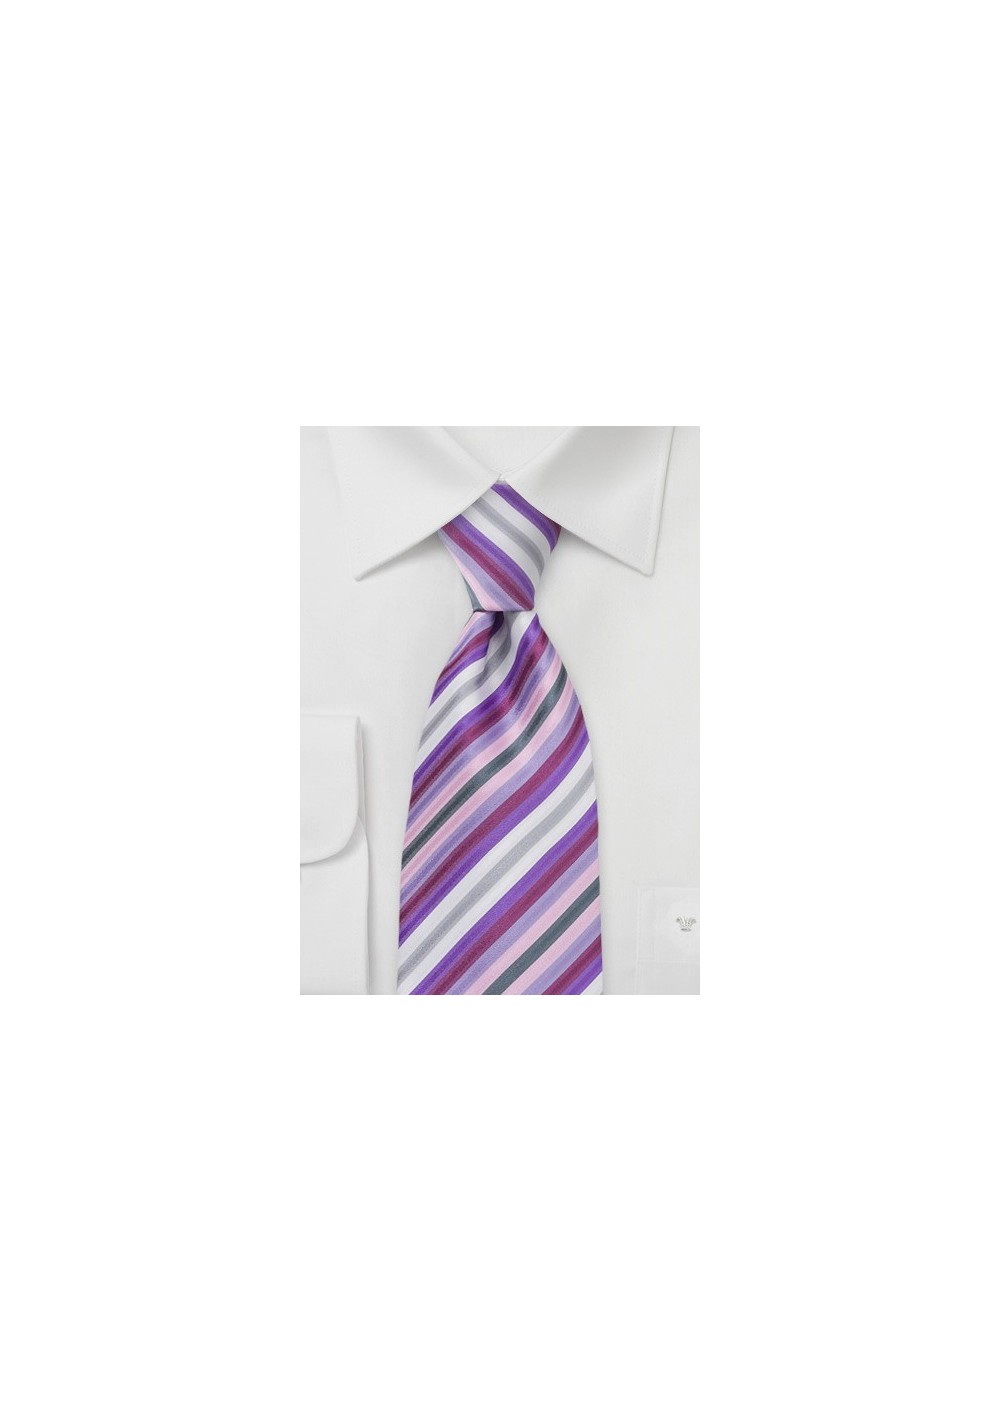 Lavender Purple Striped Tie in XL